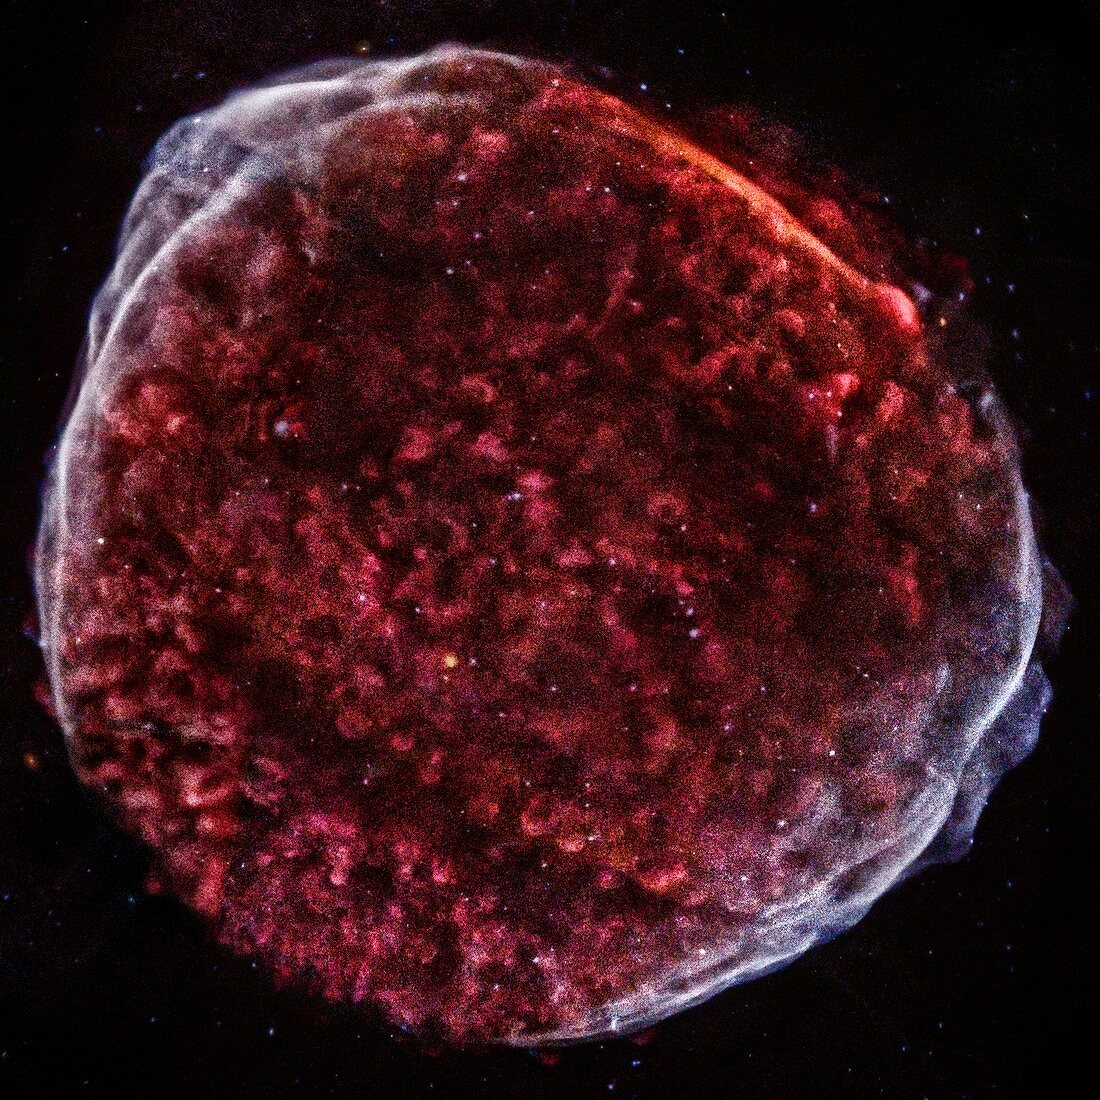 Supernova remnant,composite image